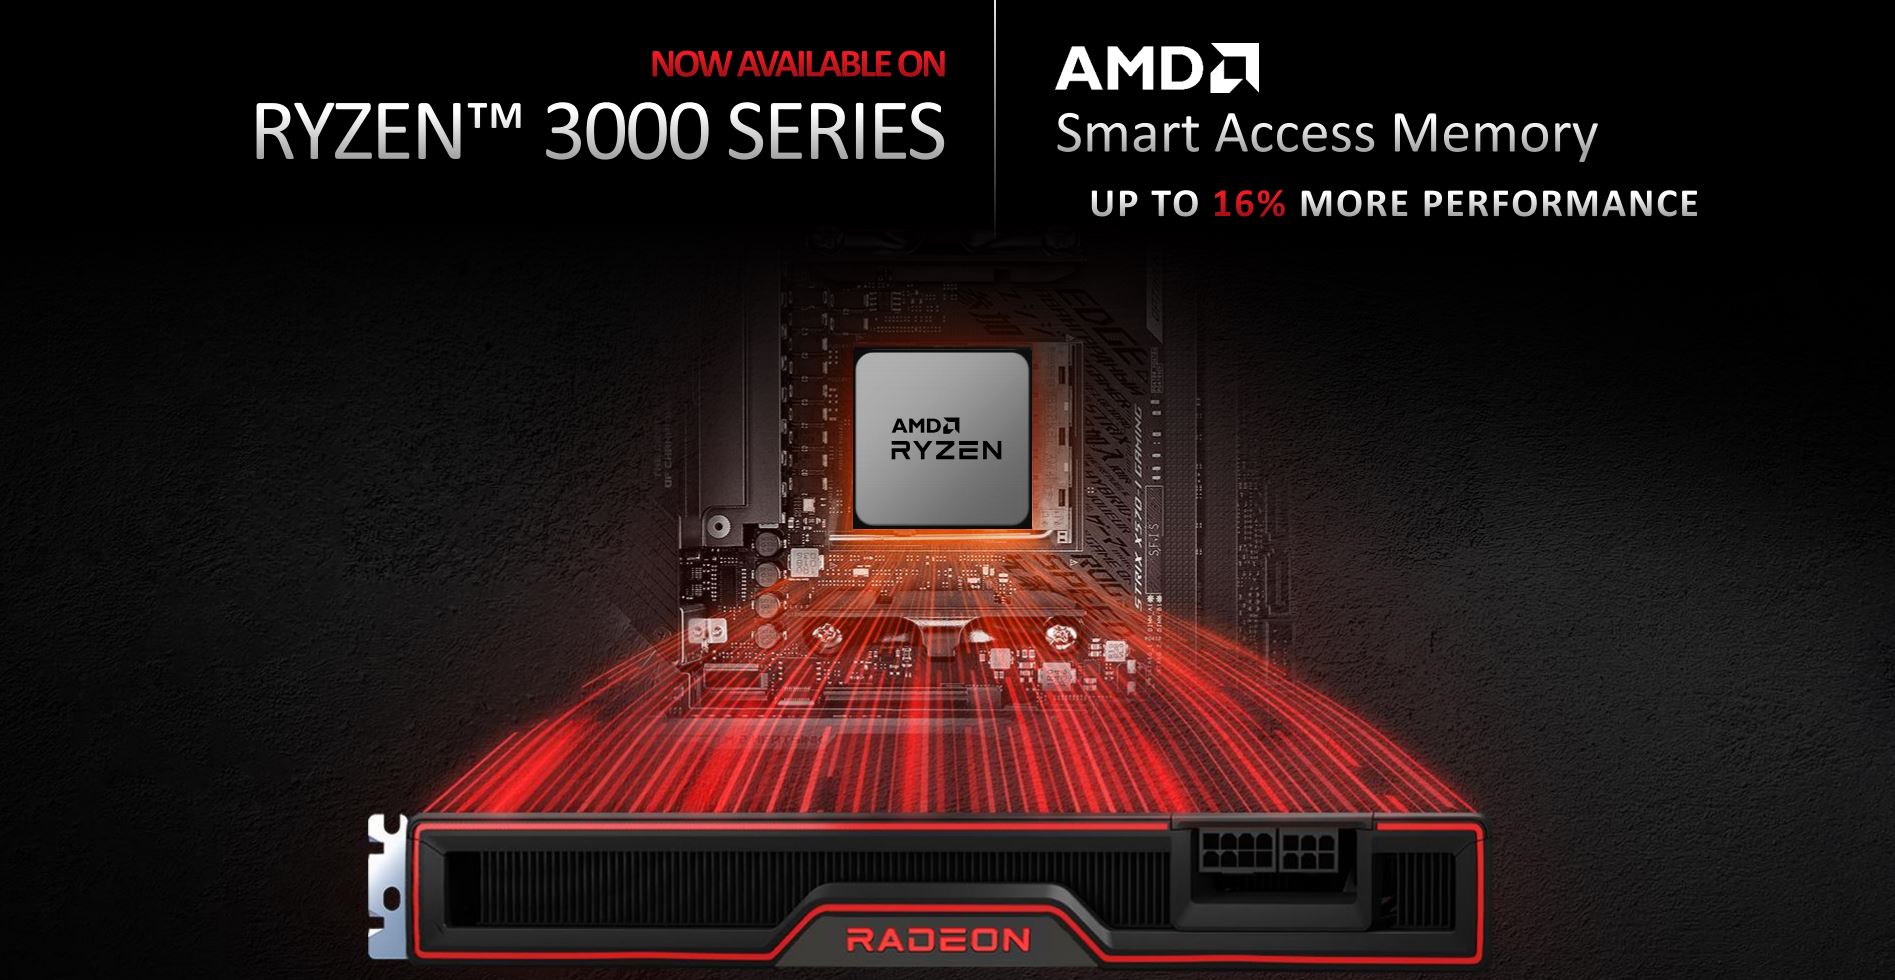 AMD brings Smart Access Memory to Ryzen 3000 Series CPUs CPU News - HEXUS.net